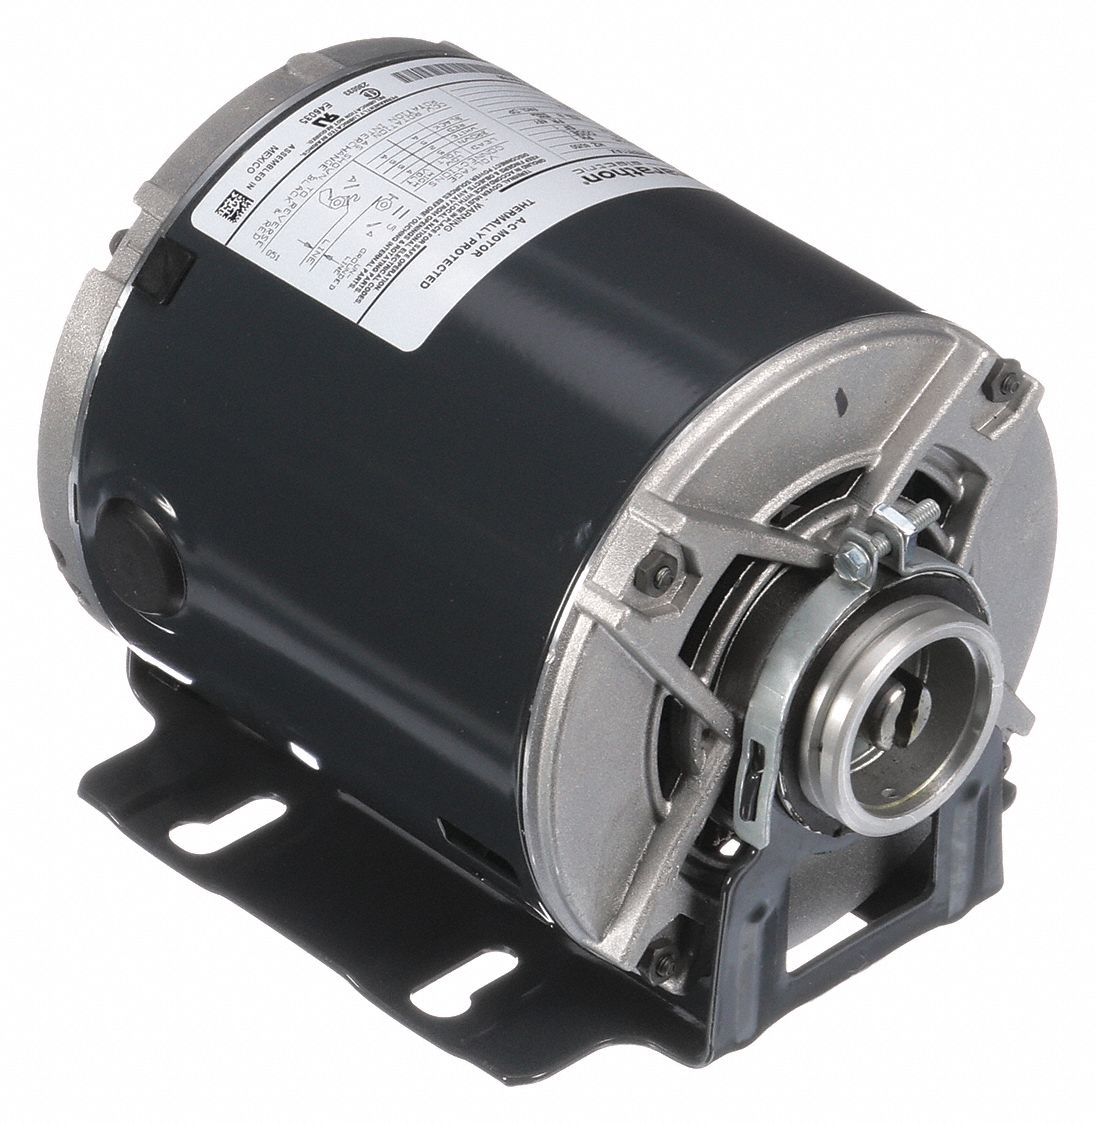 Carbonator Pump Motor: Cradle Base Mounting, 1/3 HP, 1,725 Nameplate RPM, 48Y Frame